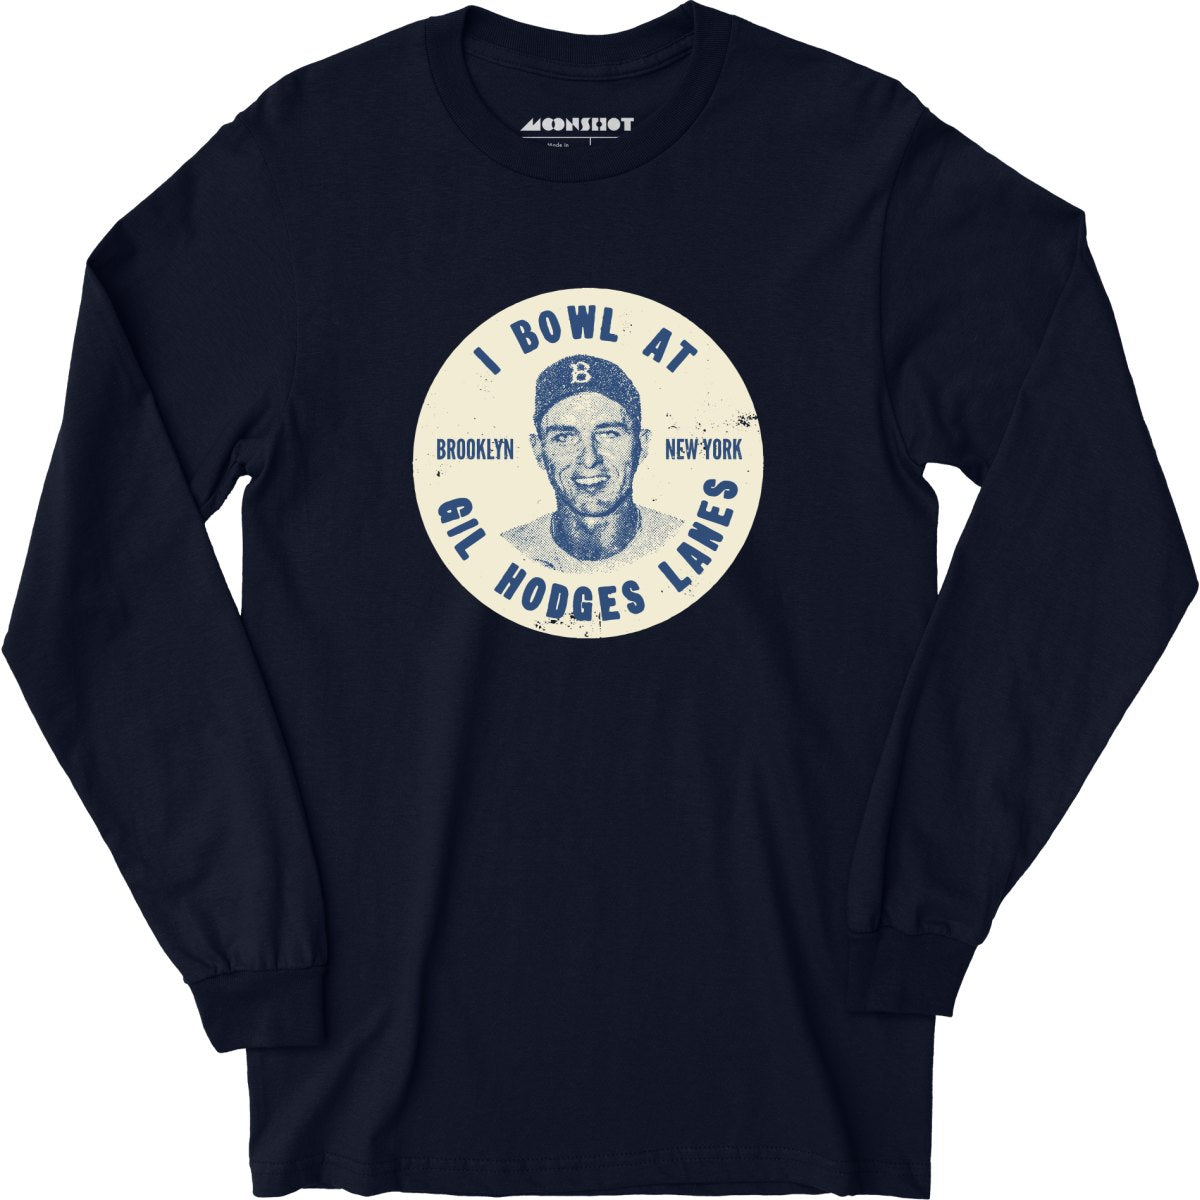 Gil Hodges Lanes - Brooklyn, NY - Vintage Bowling Alley - Long Sleeve T-Shirt